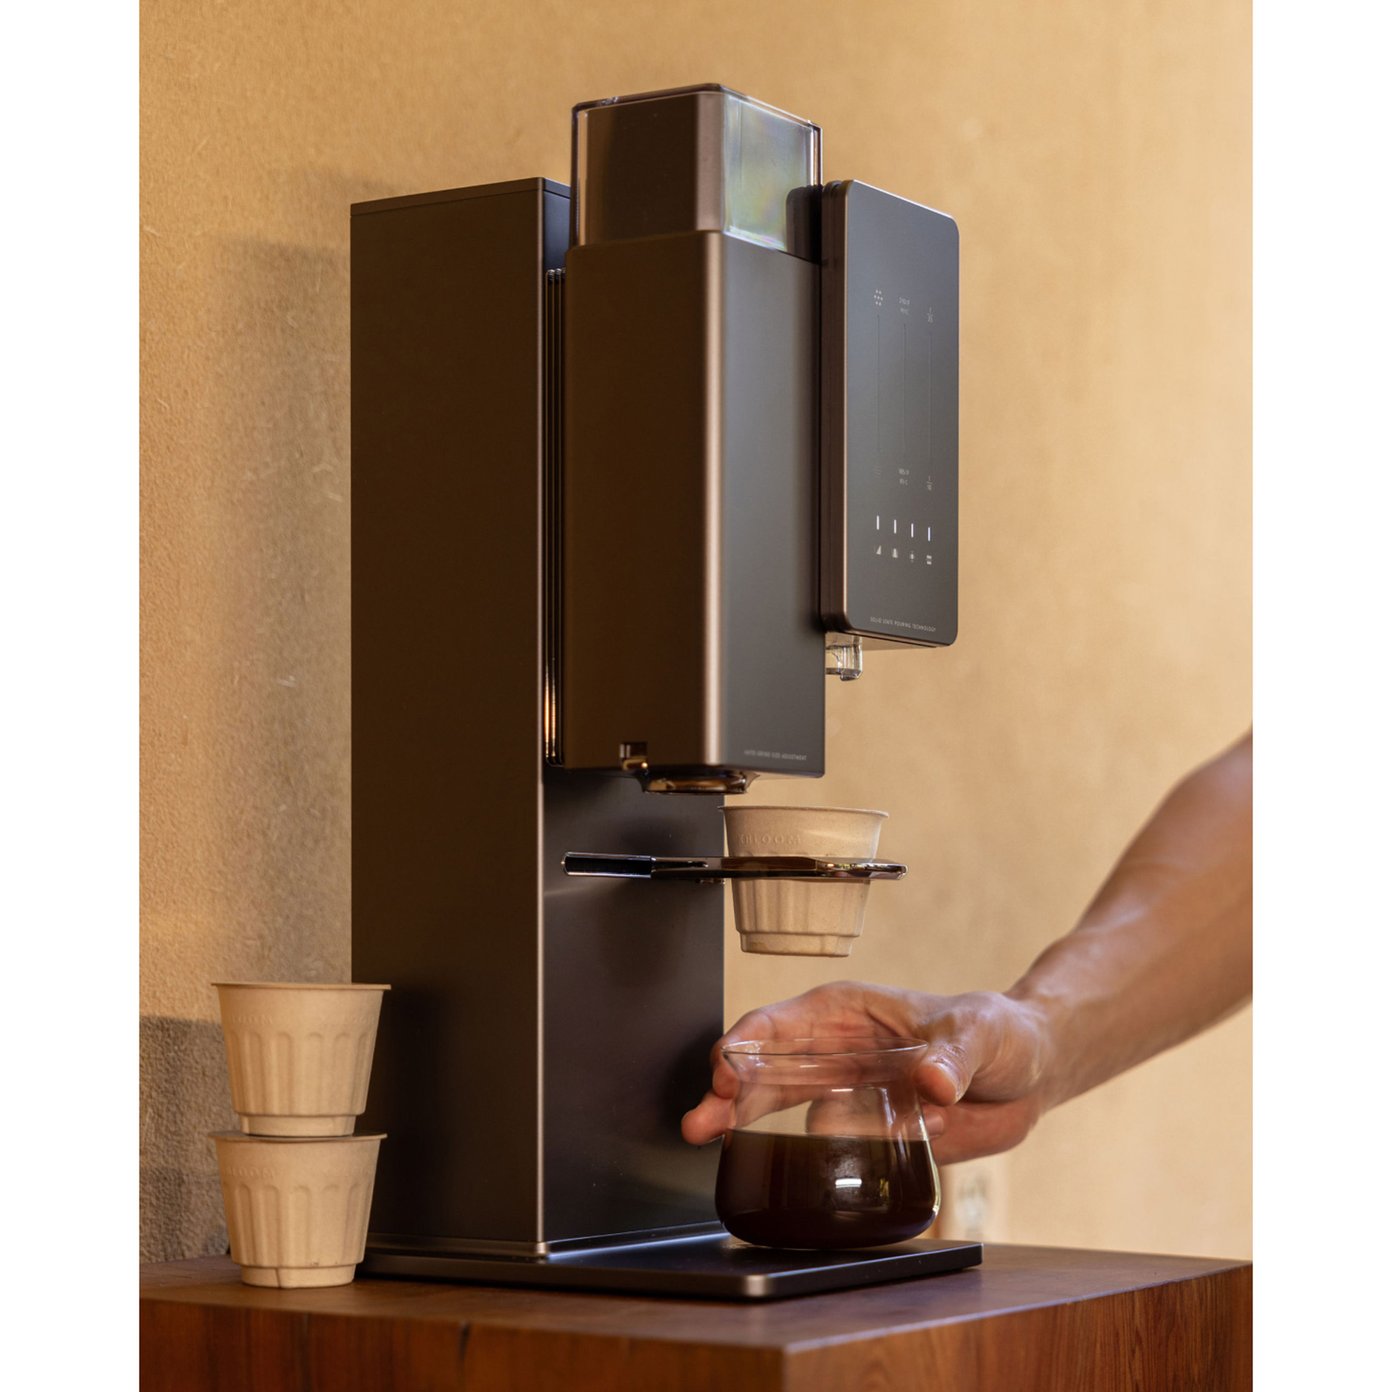 xBloom Coffee Machine